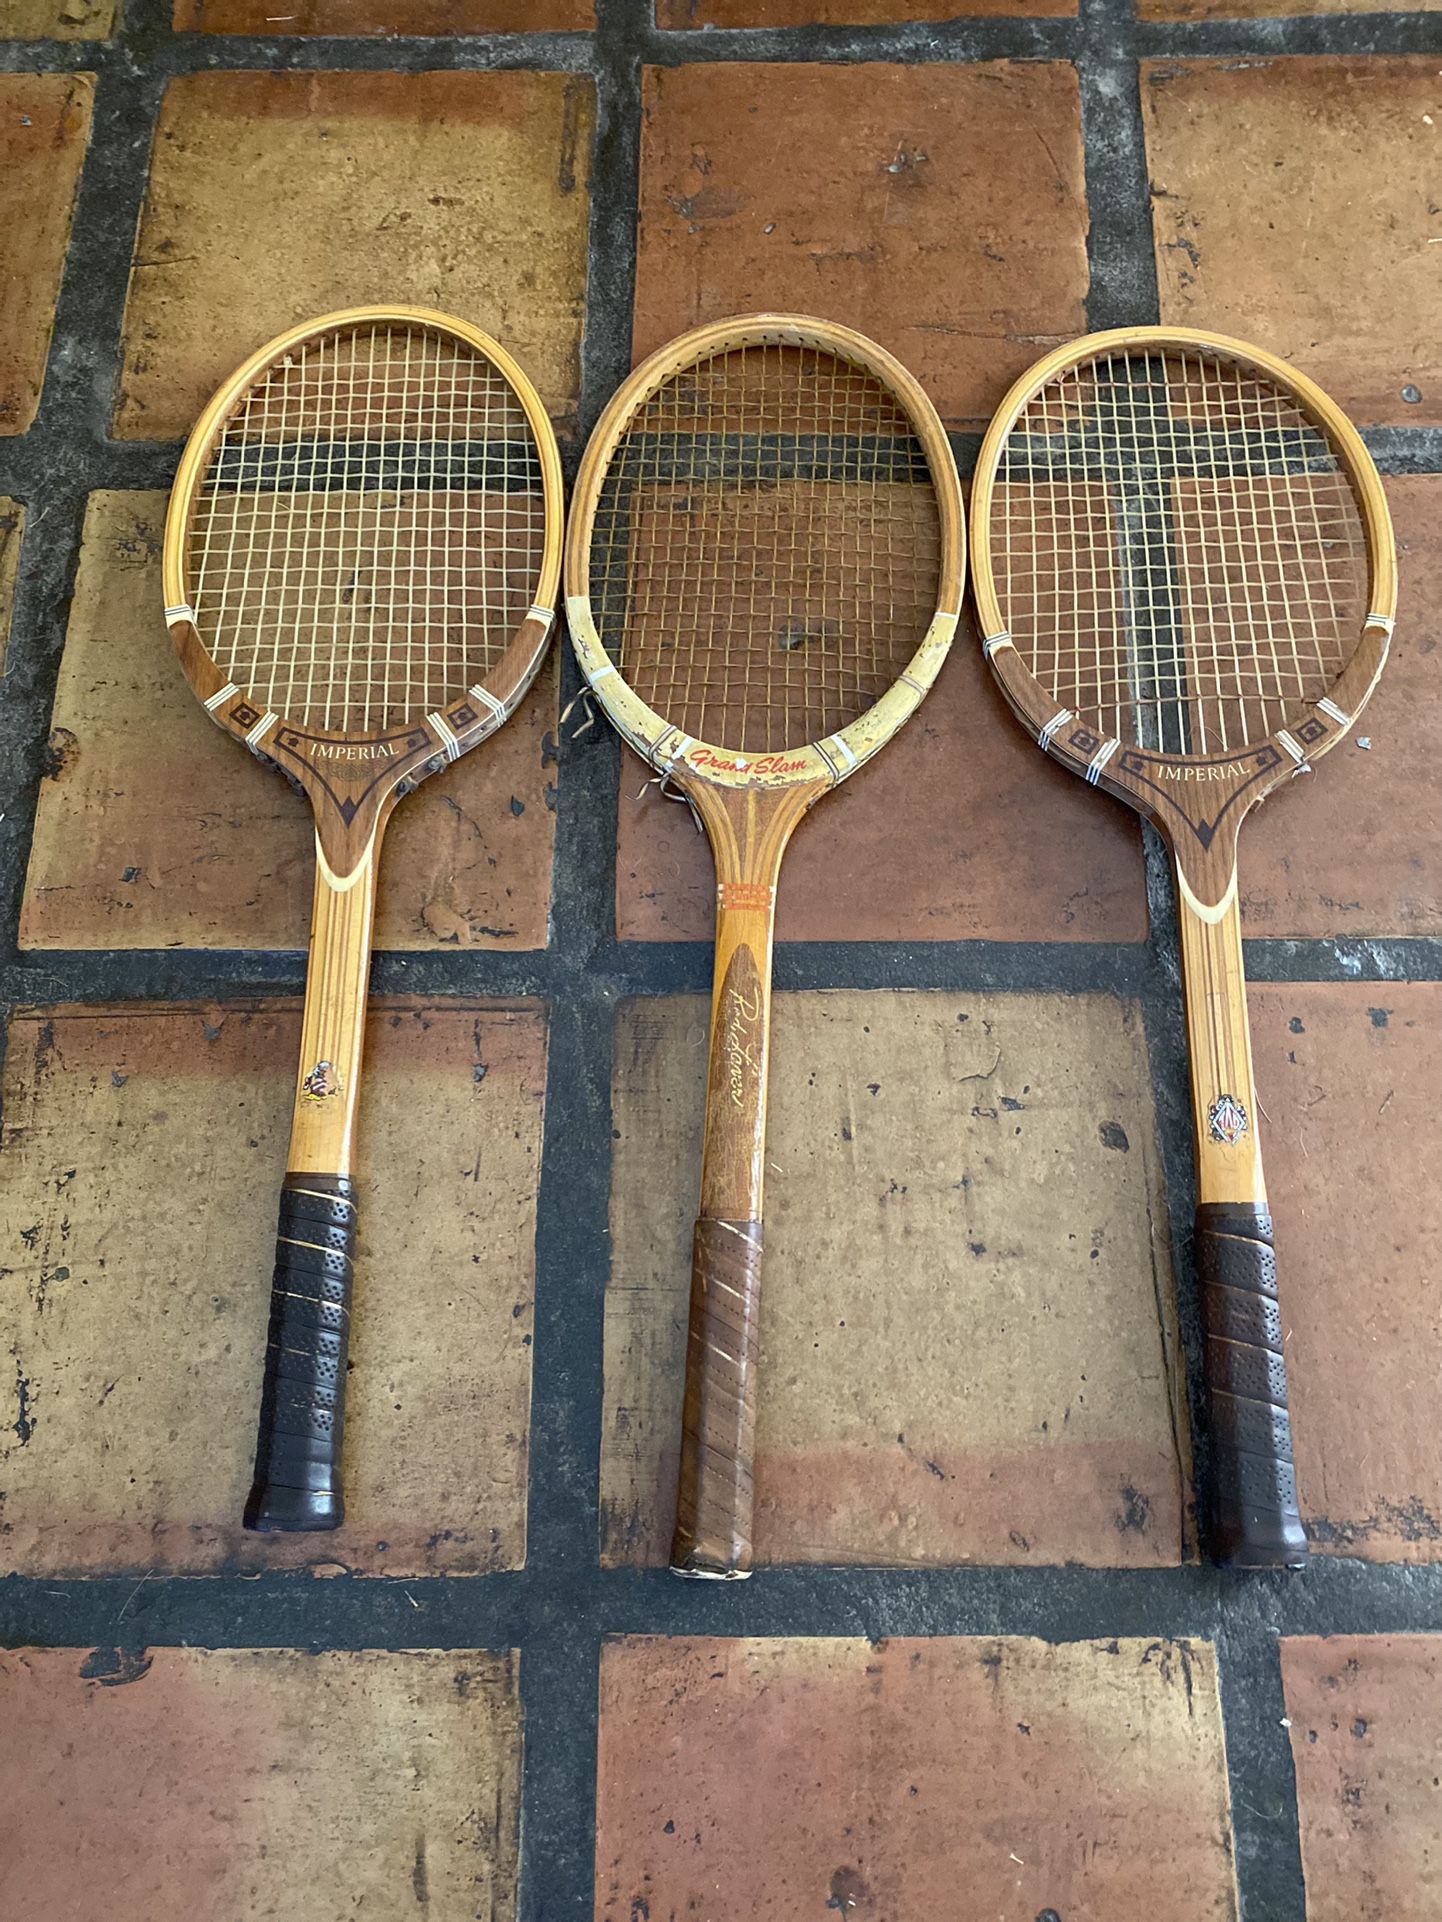 wooden vintage tennis rackets